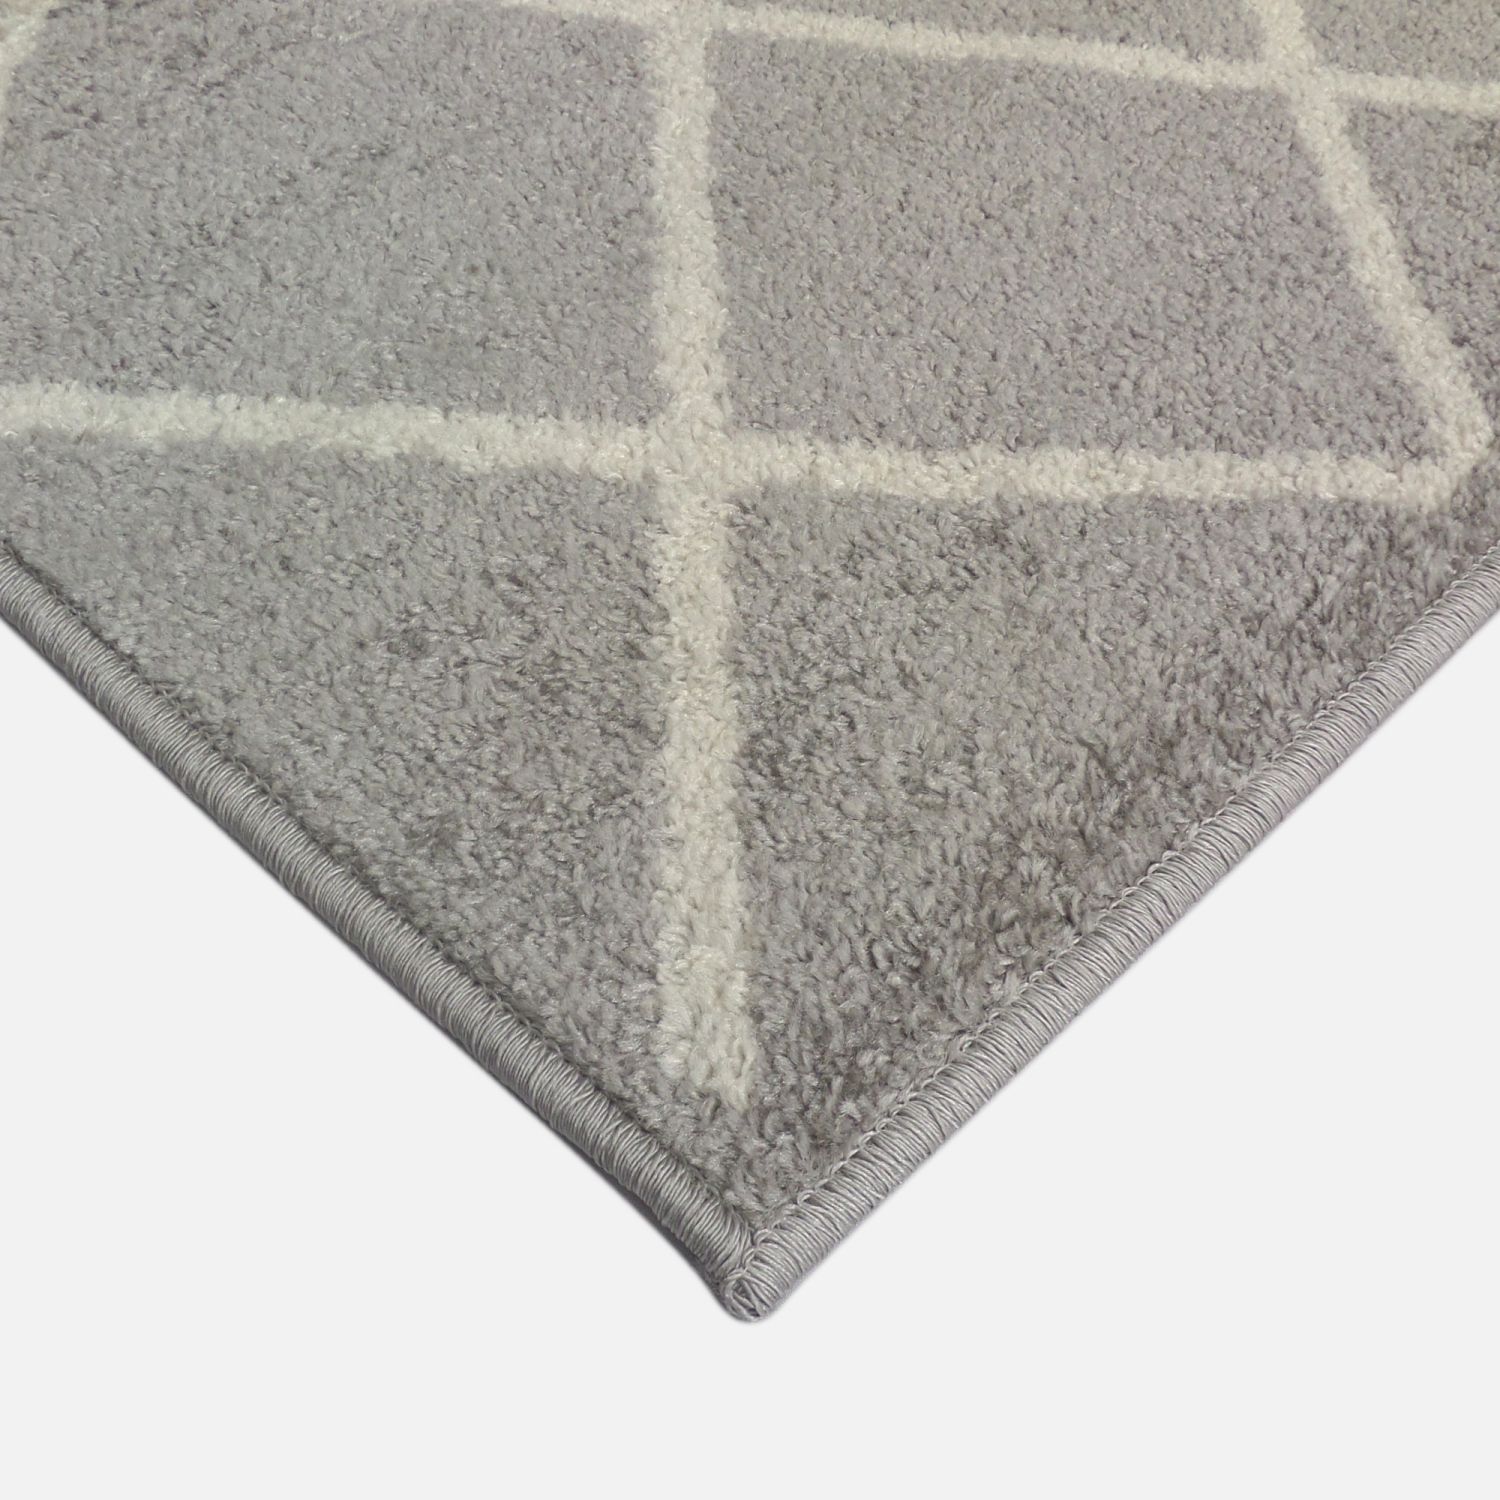 Alfombra rombos salmiakki gris • AO tienda online alfombras